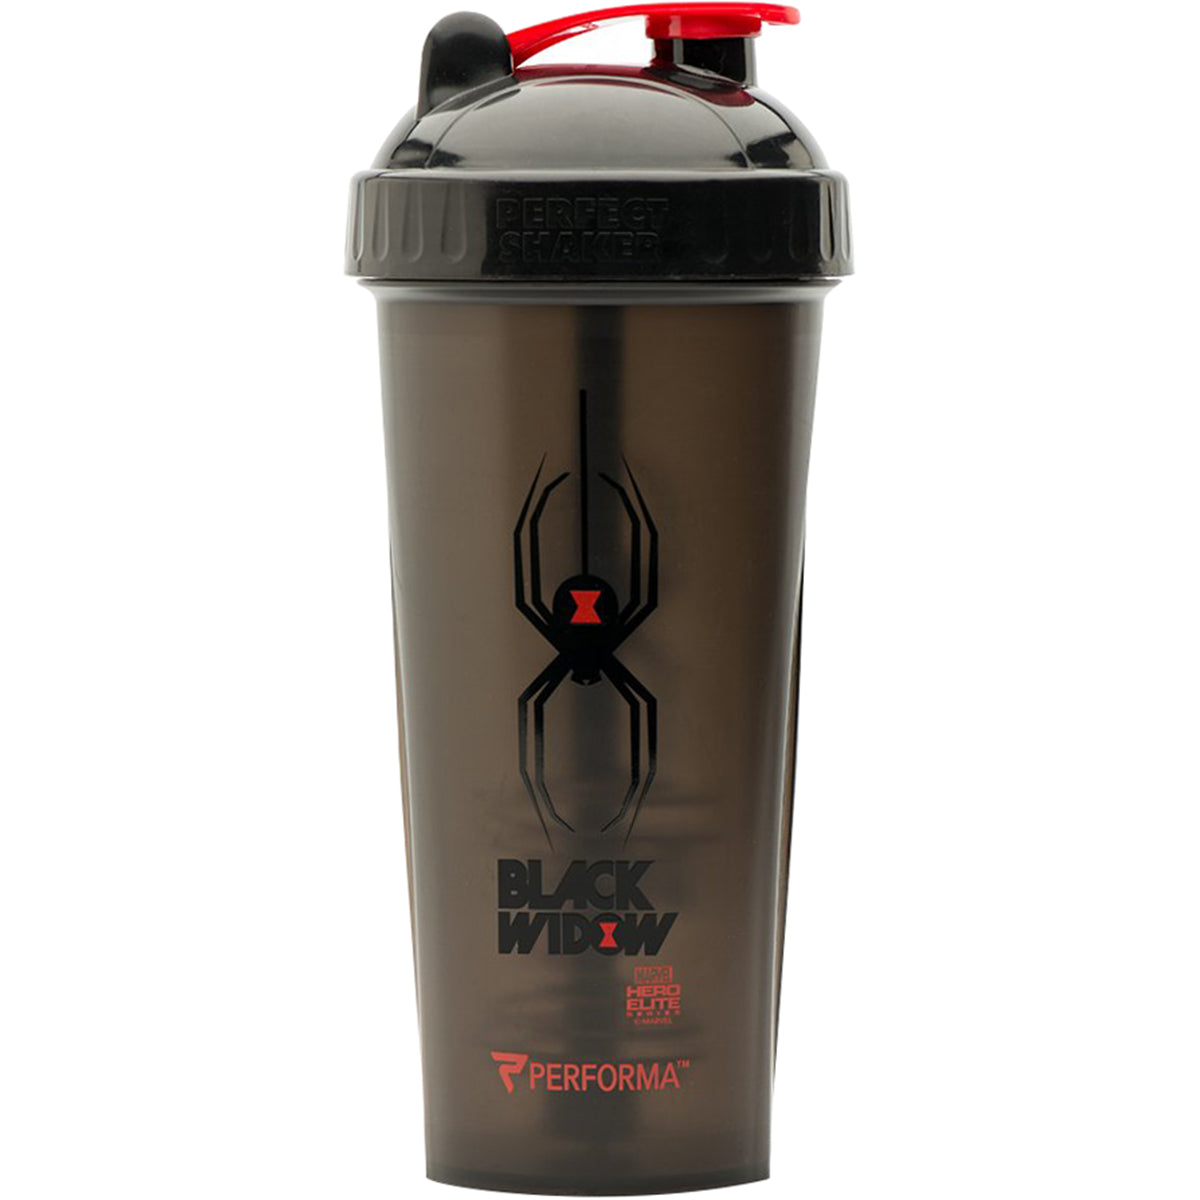 Performa PerfectShaker Avengers Infinity War Shaker Cup Bottle - Black Widow PerfectShaker